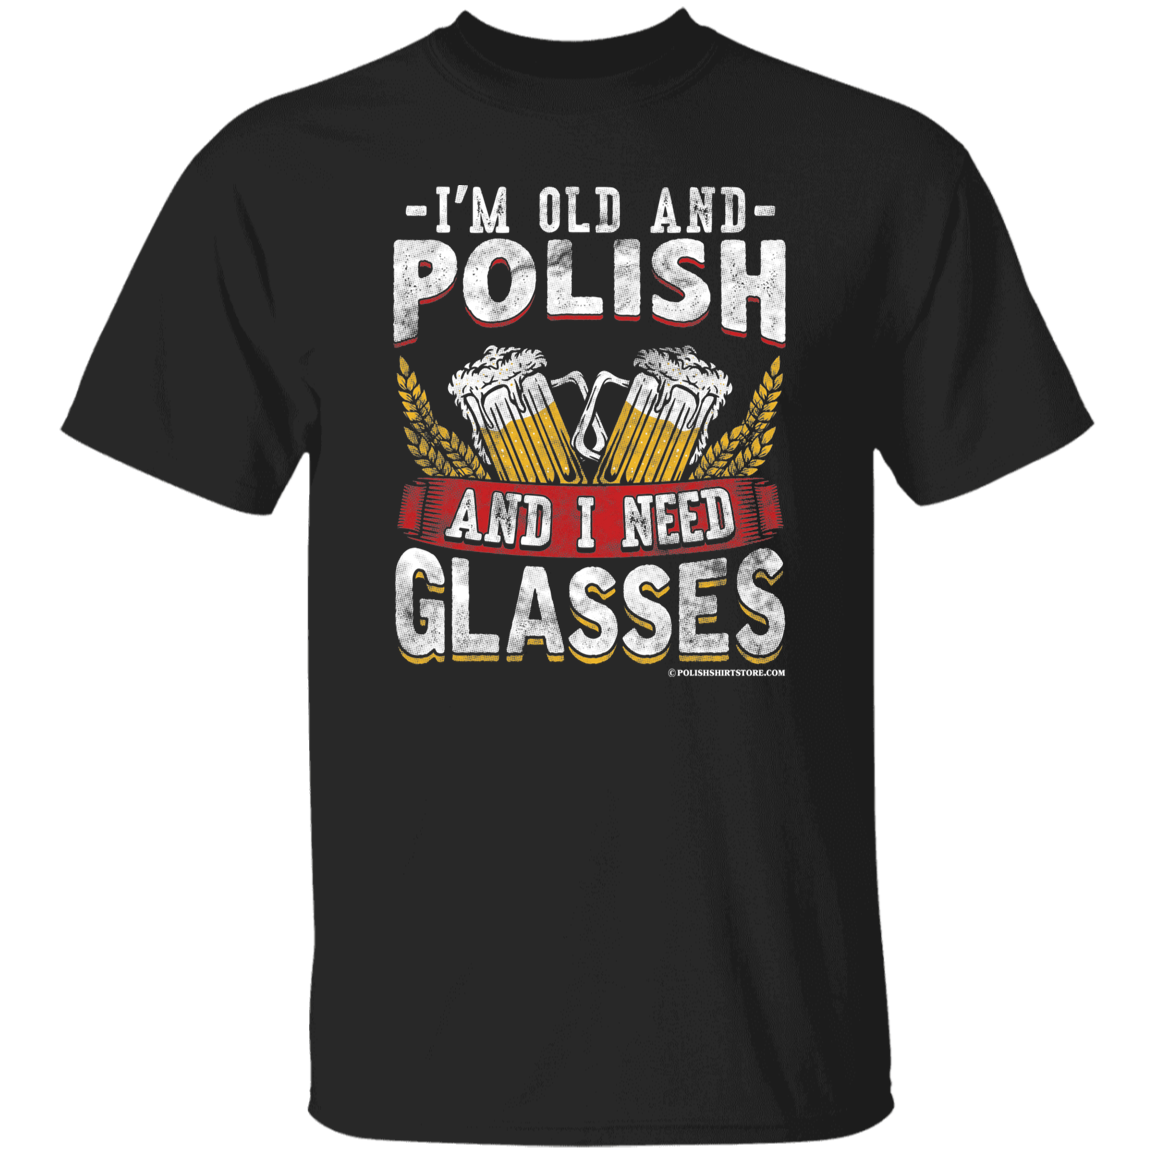 I'm Old And Polish And I Need Glasses Apparel CustomCat G500 5.3 oz. T-Shirt Black S